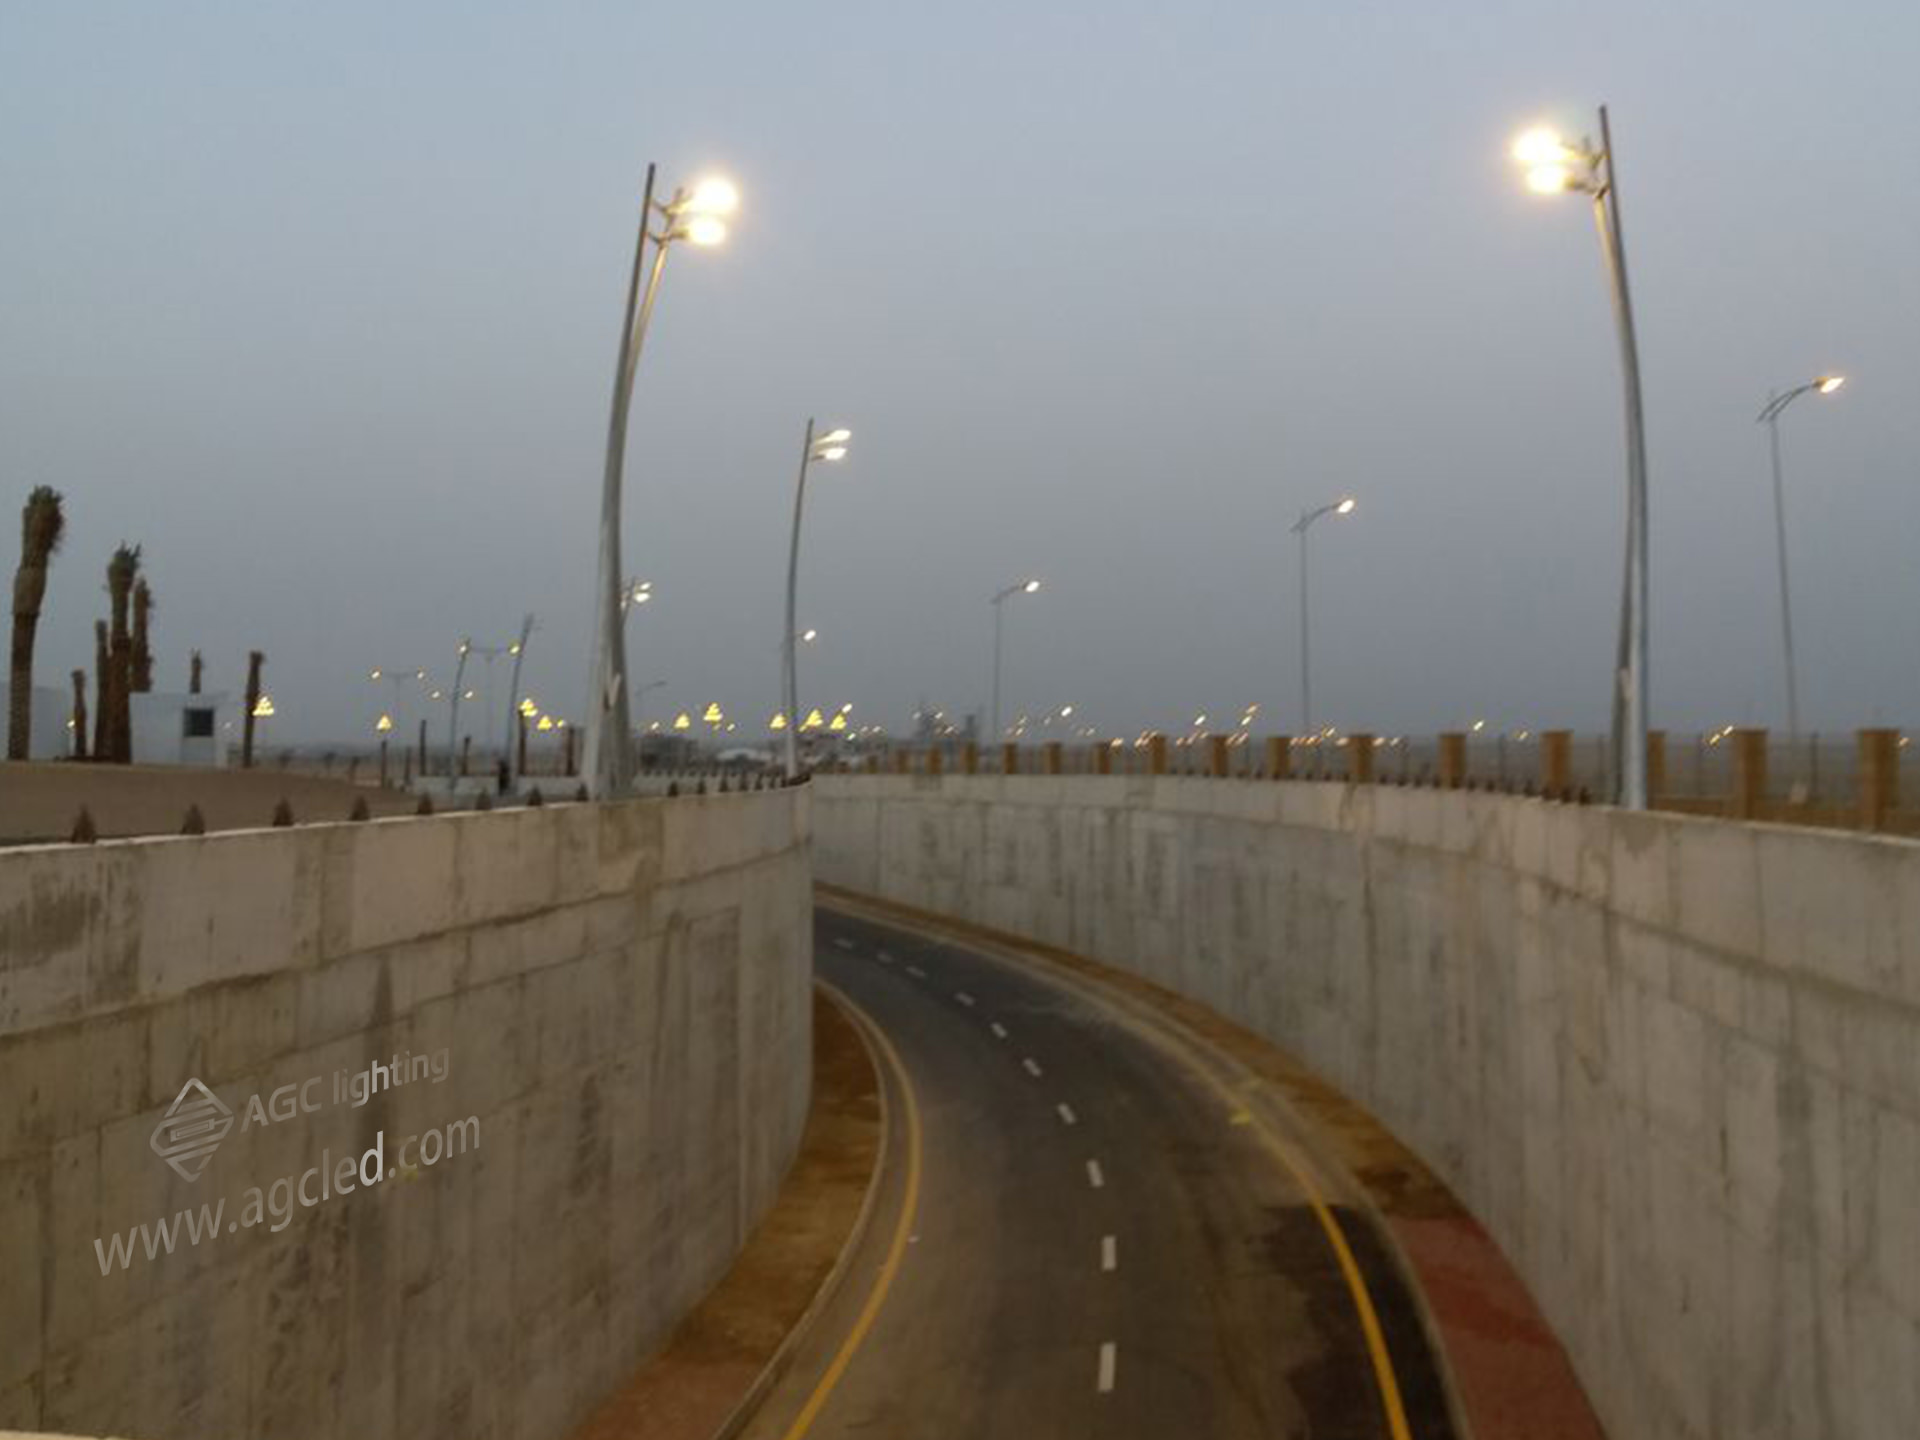 150pcs LED Street Light in Pakistan Roadway